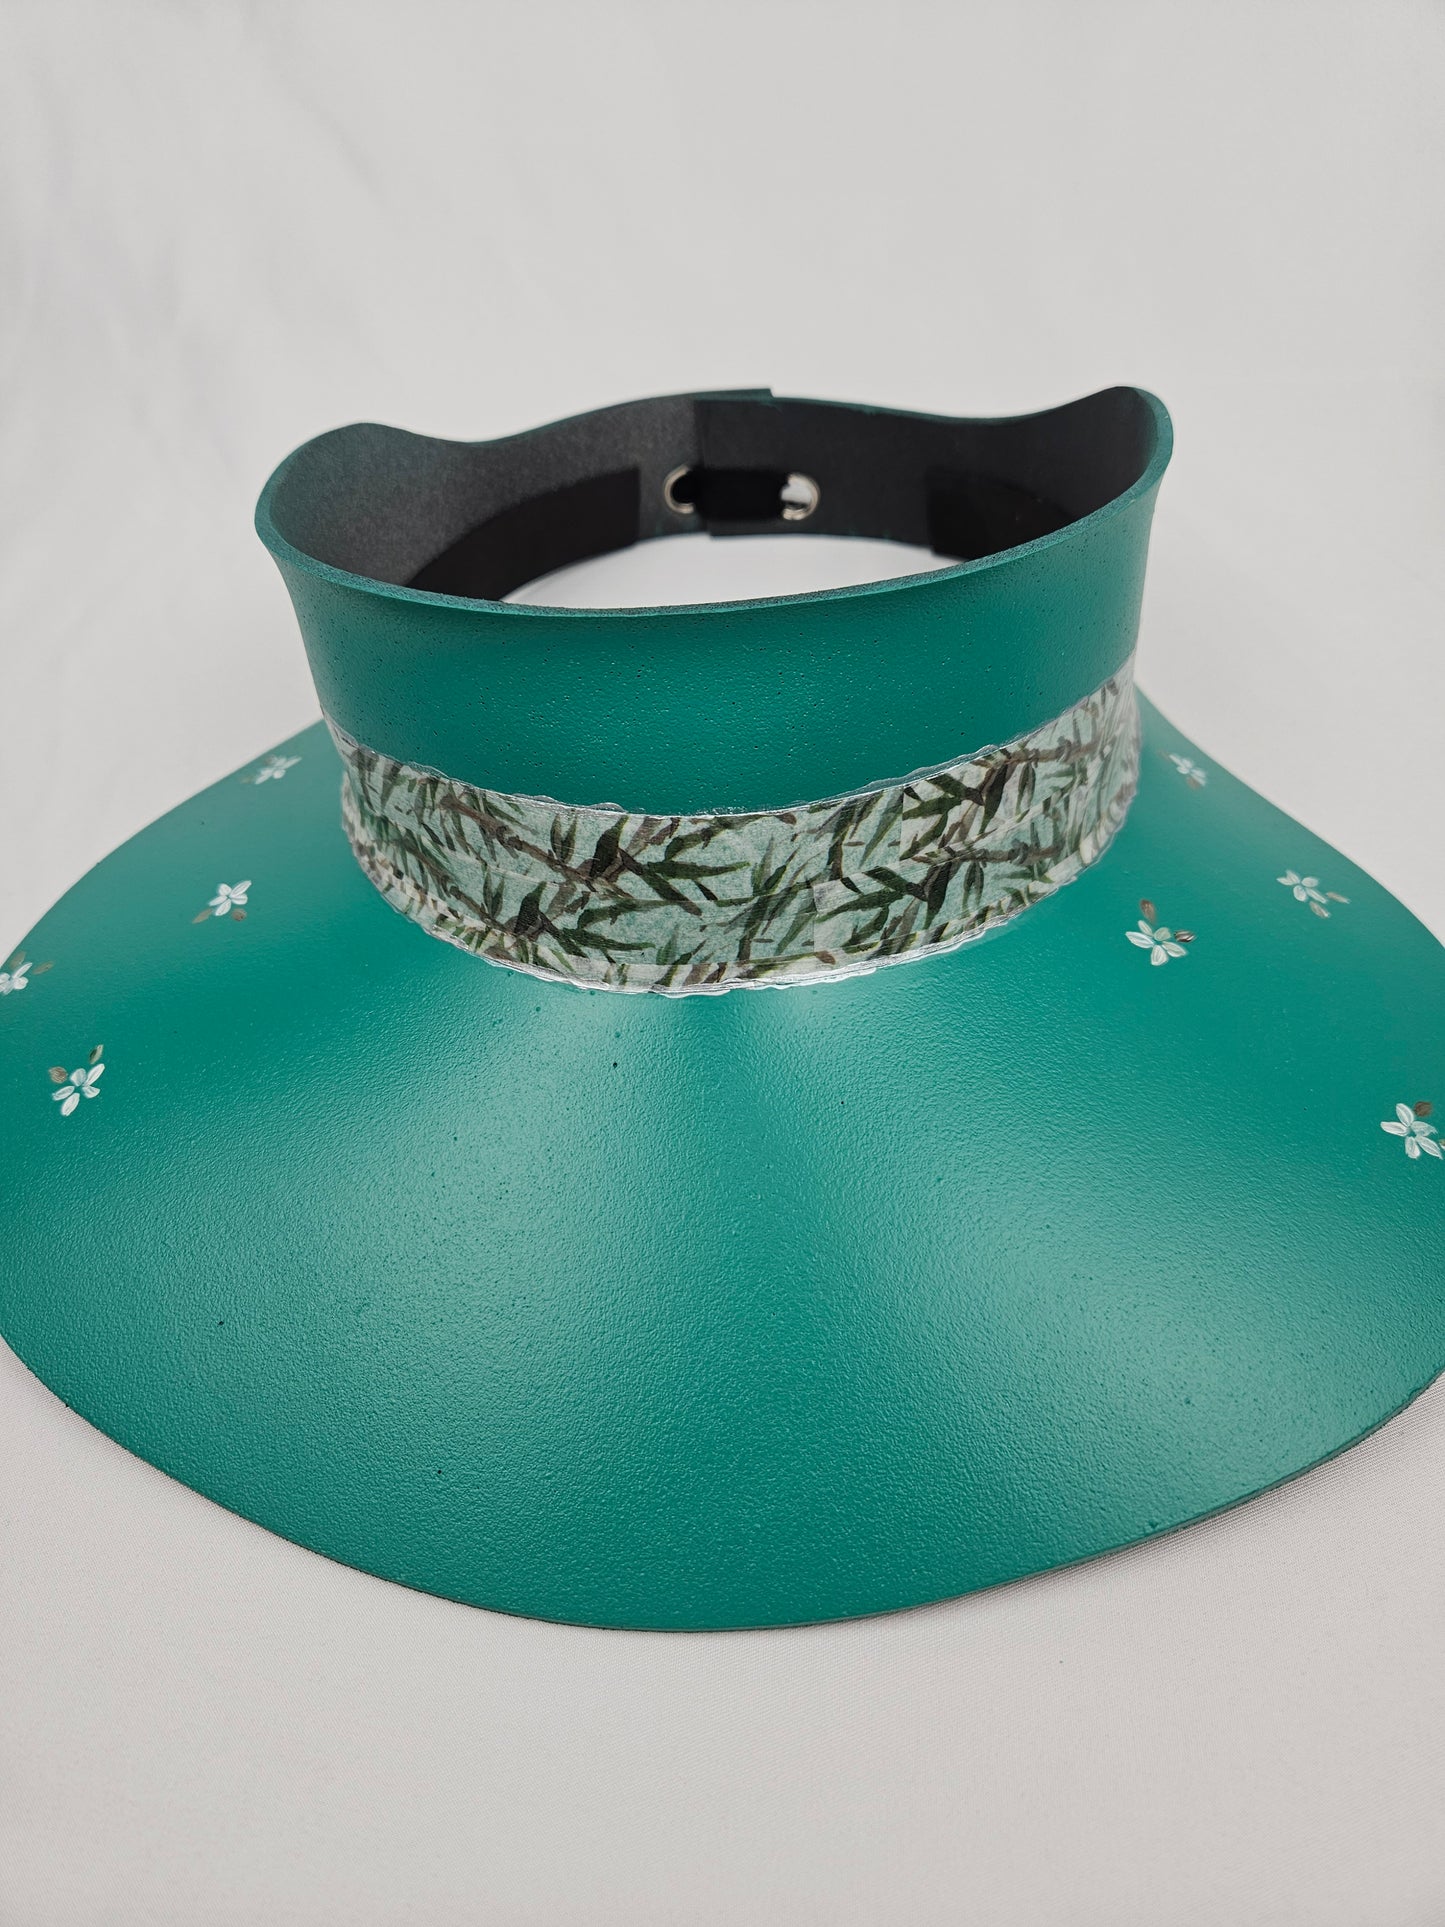 Trending Emerald Green Audrey Foam Sun Visor Hat with Elegant Leaf Themed Band and Handpainted Floral Motif: Church, Brunch, Derby, Garden, Beach, Pool, Asian, No Headache